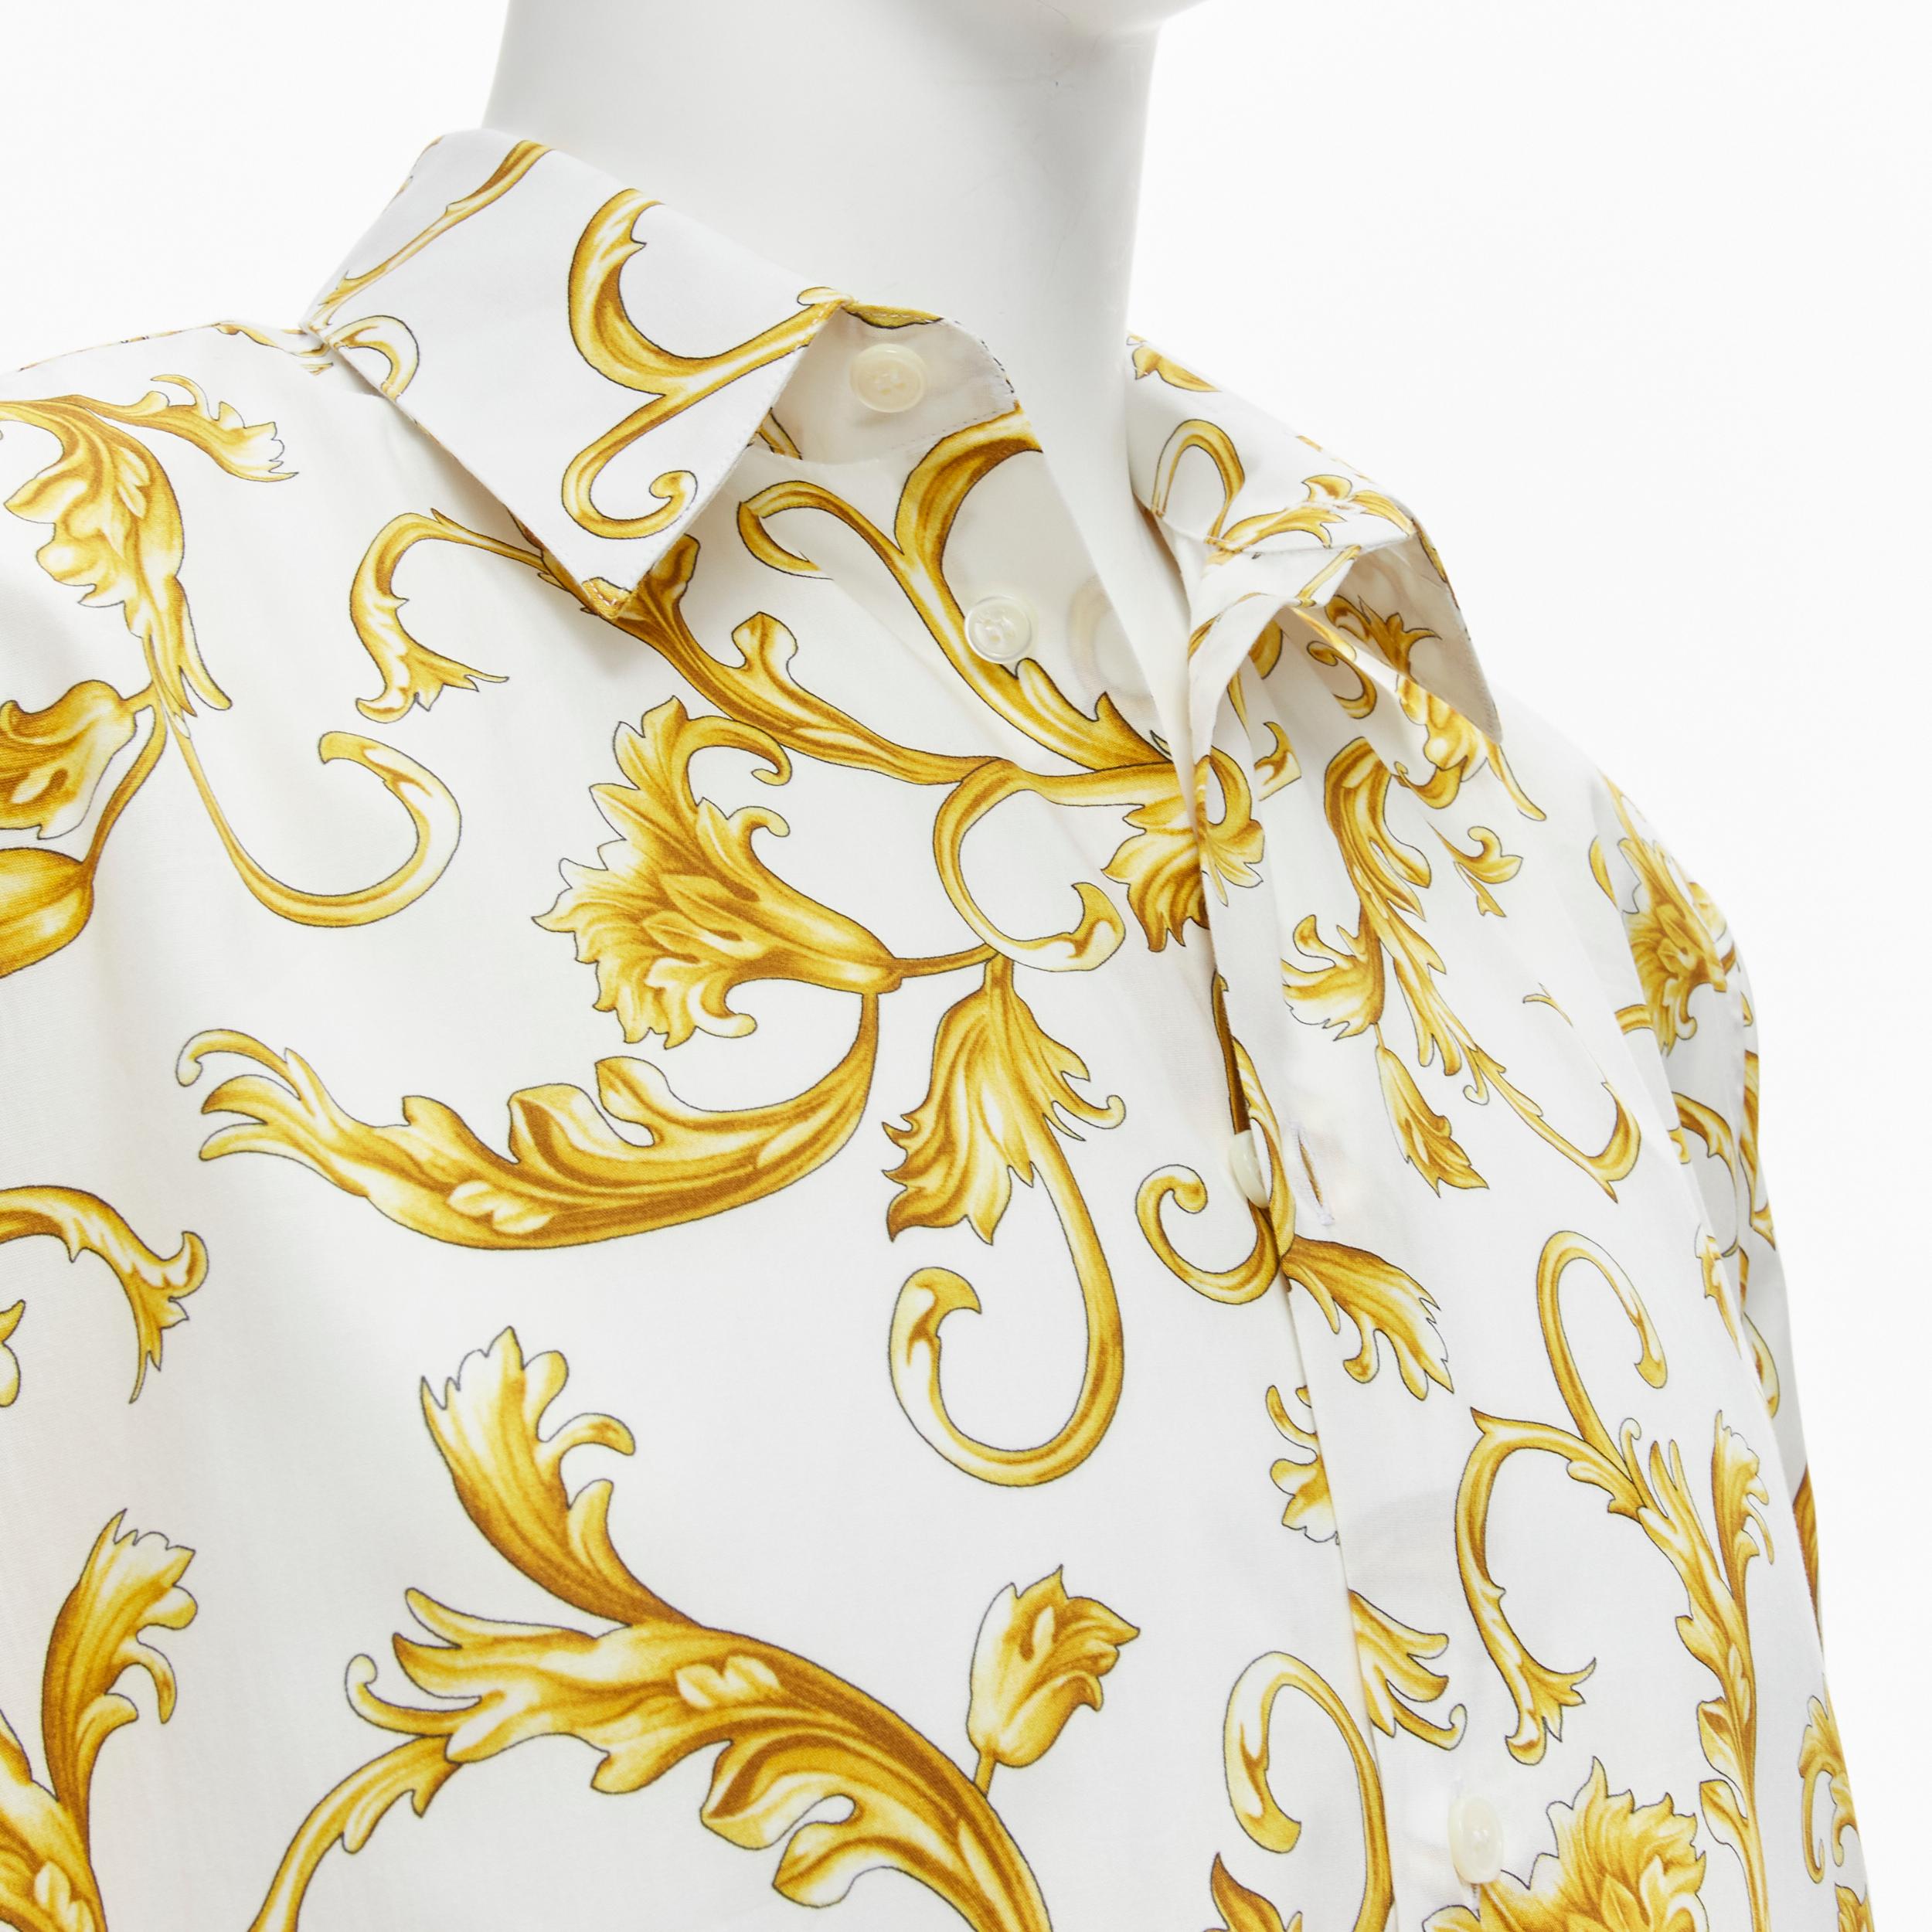 new VERSACE Barocco Rococo white gold floral leaf cotton shirt EU40 M / L
Brand: Versace
Designer: Donatella Versace
Collection: Versace Barocco 
Material: Cotton
Color: White
Pattern: Barocco
Closure: Button
Extra Detail: Classic collar. Button